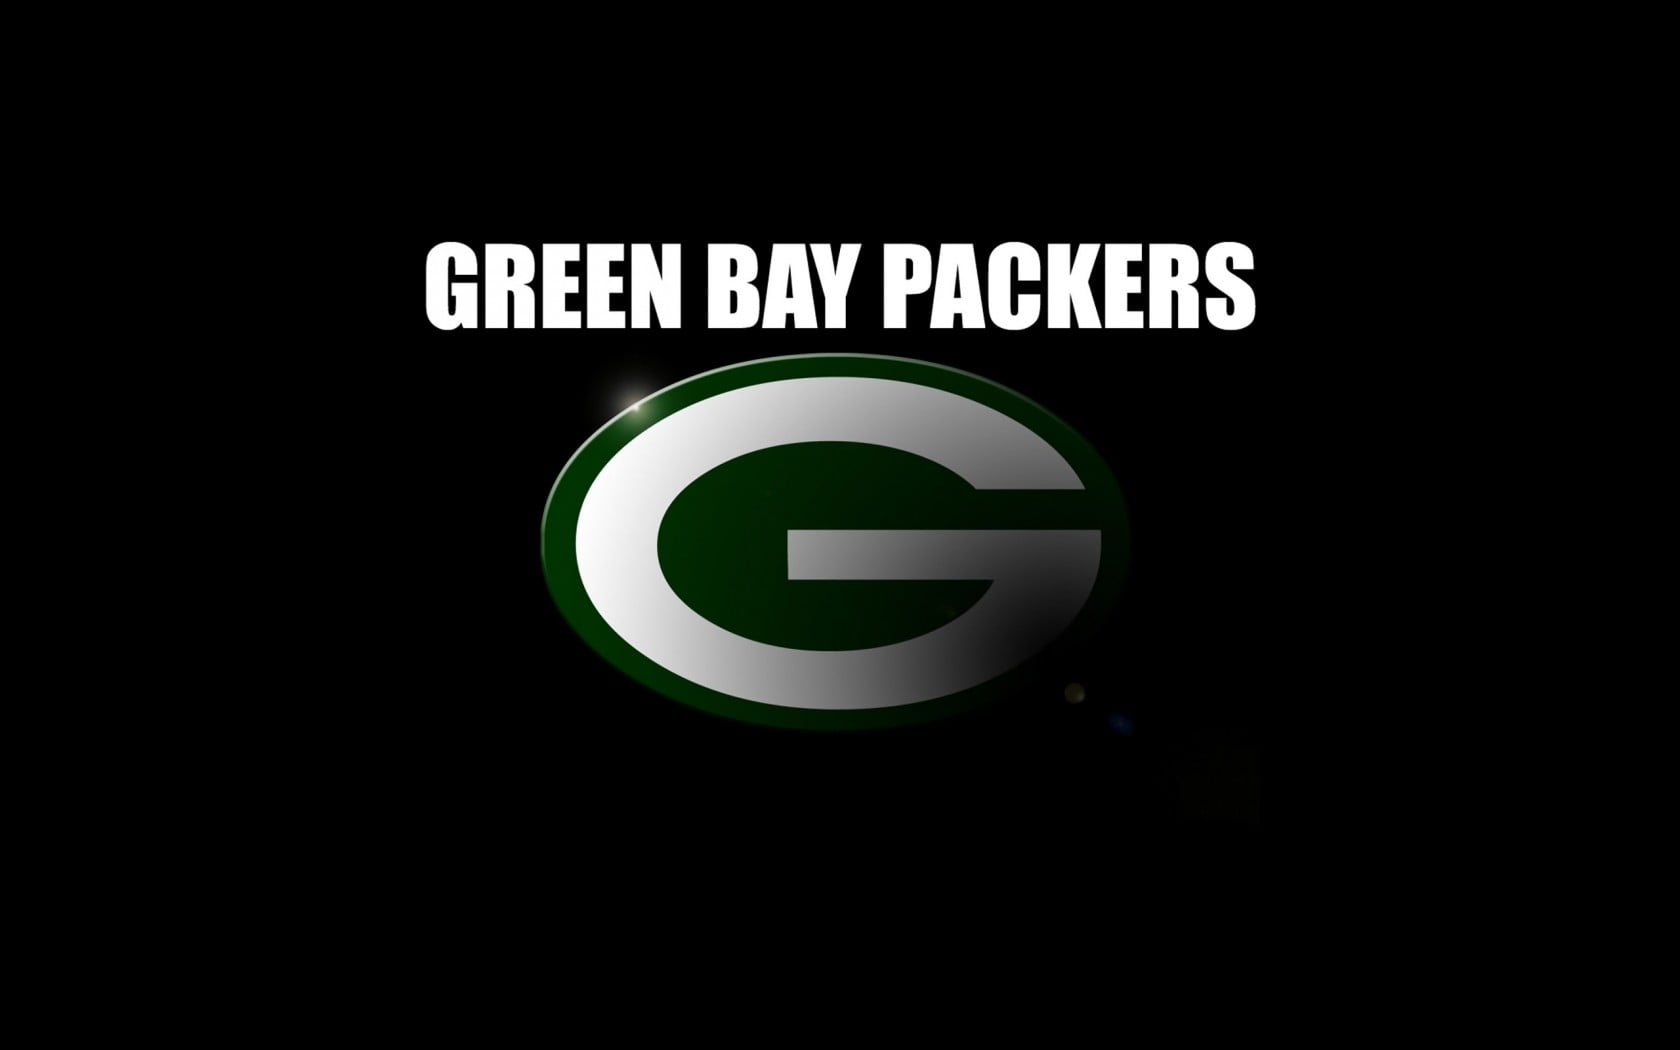 Green Bay Packers logo, American football, digital art, typography